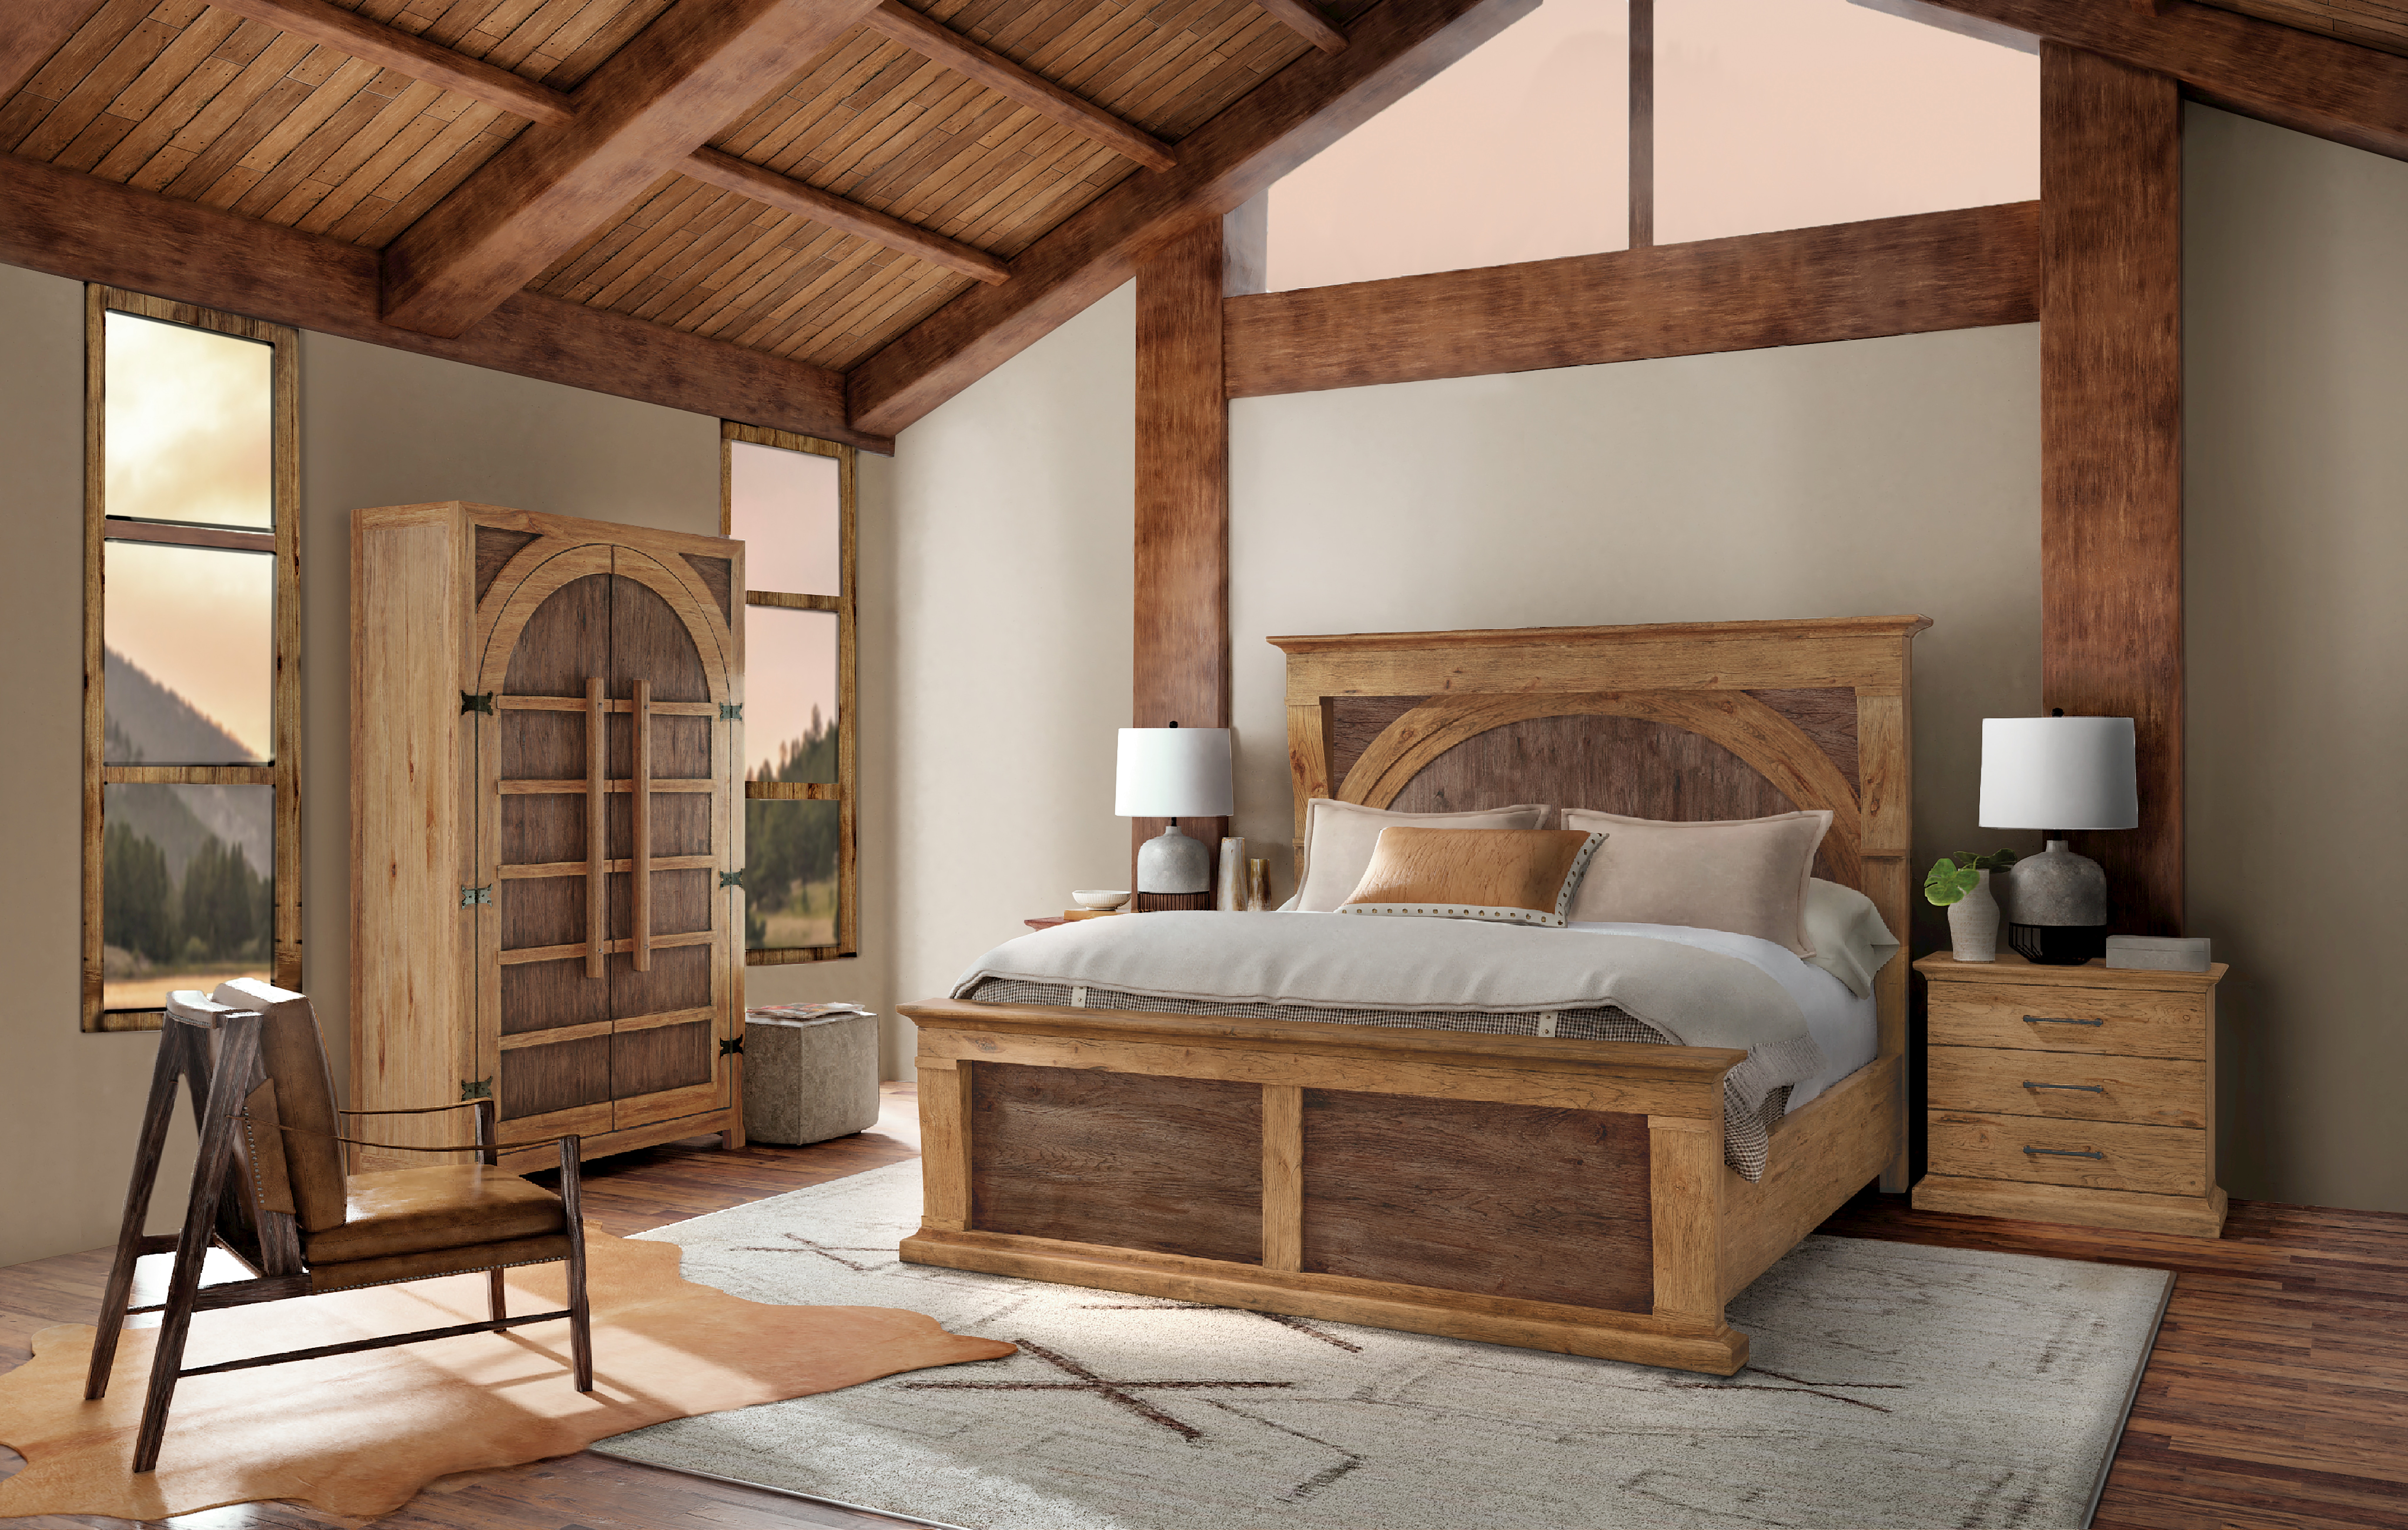 Bedroom > Chests – D&L Furniture